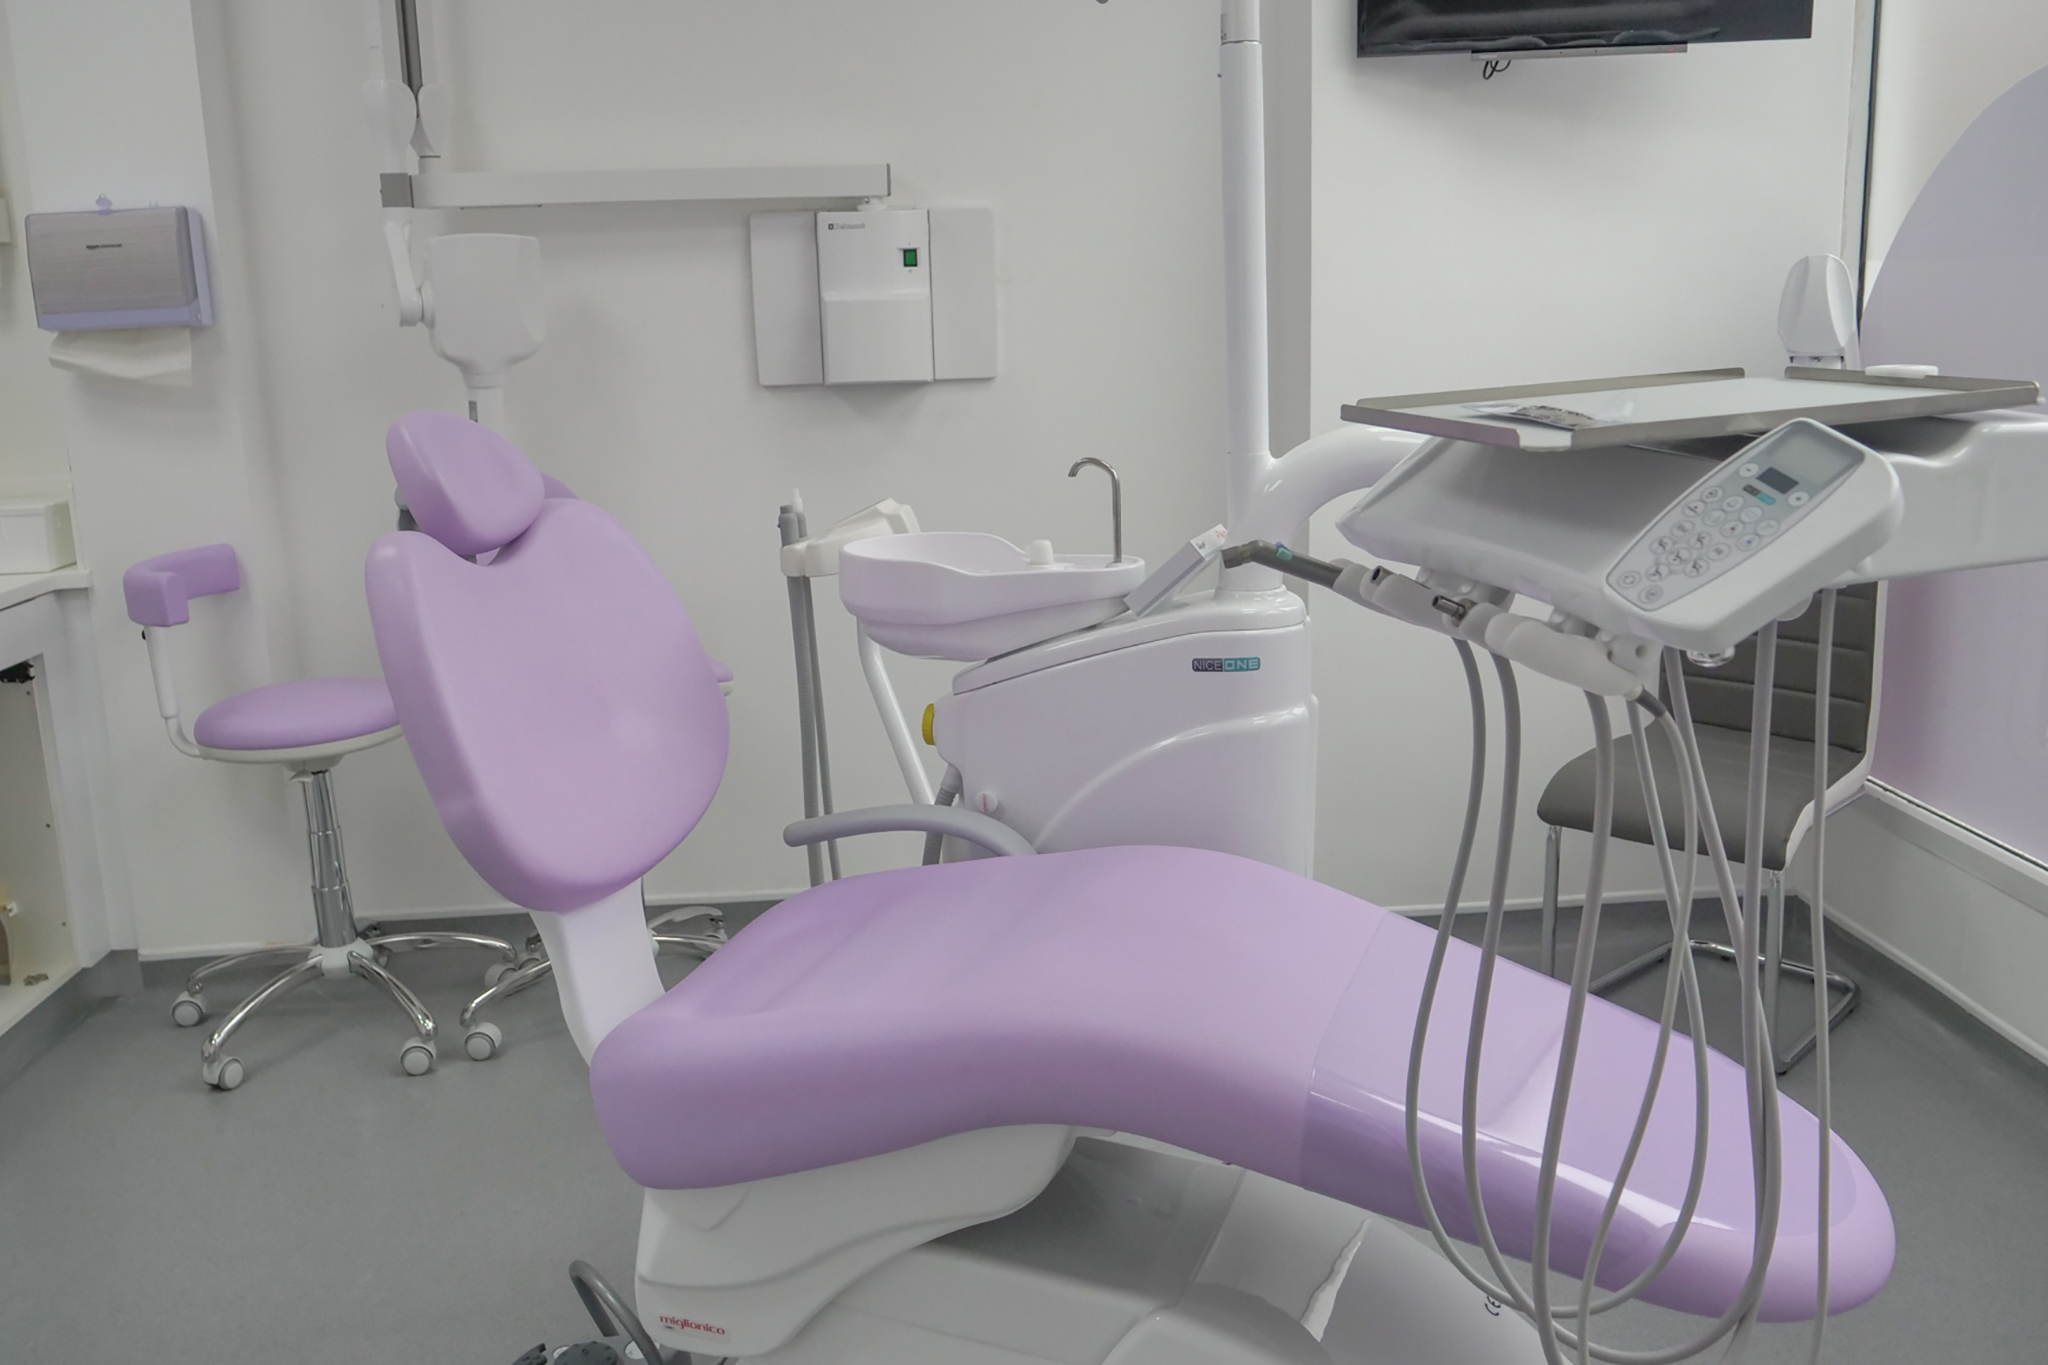 Gentle Smile Dental's surgery room